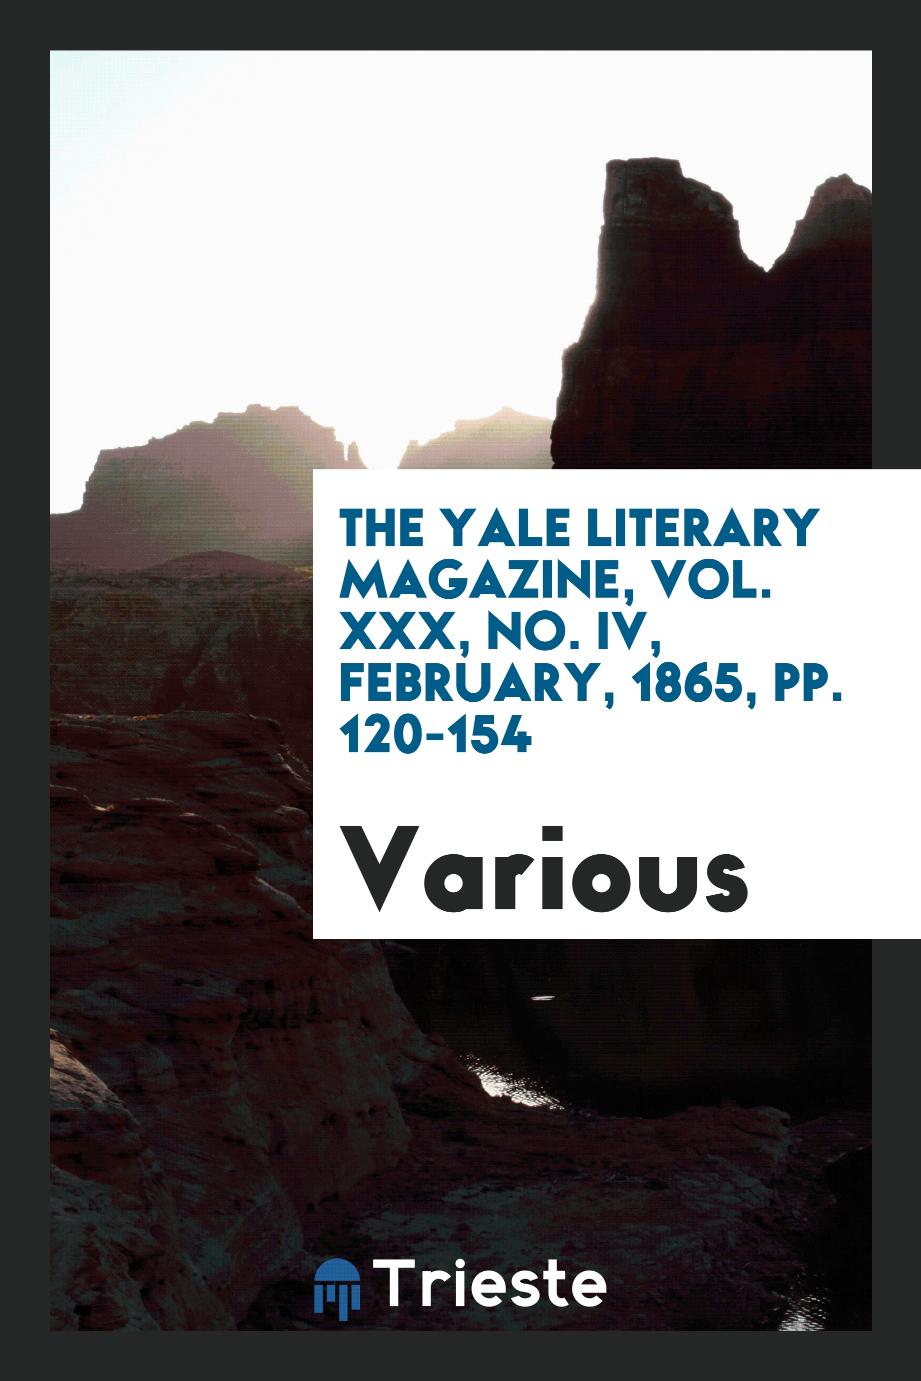 The Yale literary magazine, Vol. XXX, No. IV, February, 1865, pp. 120-154